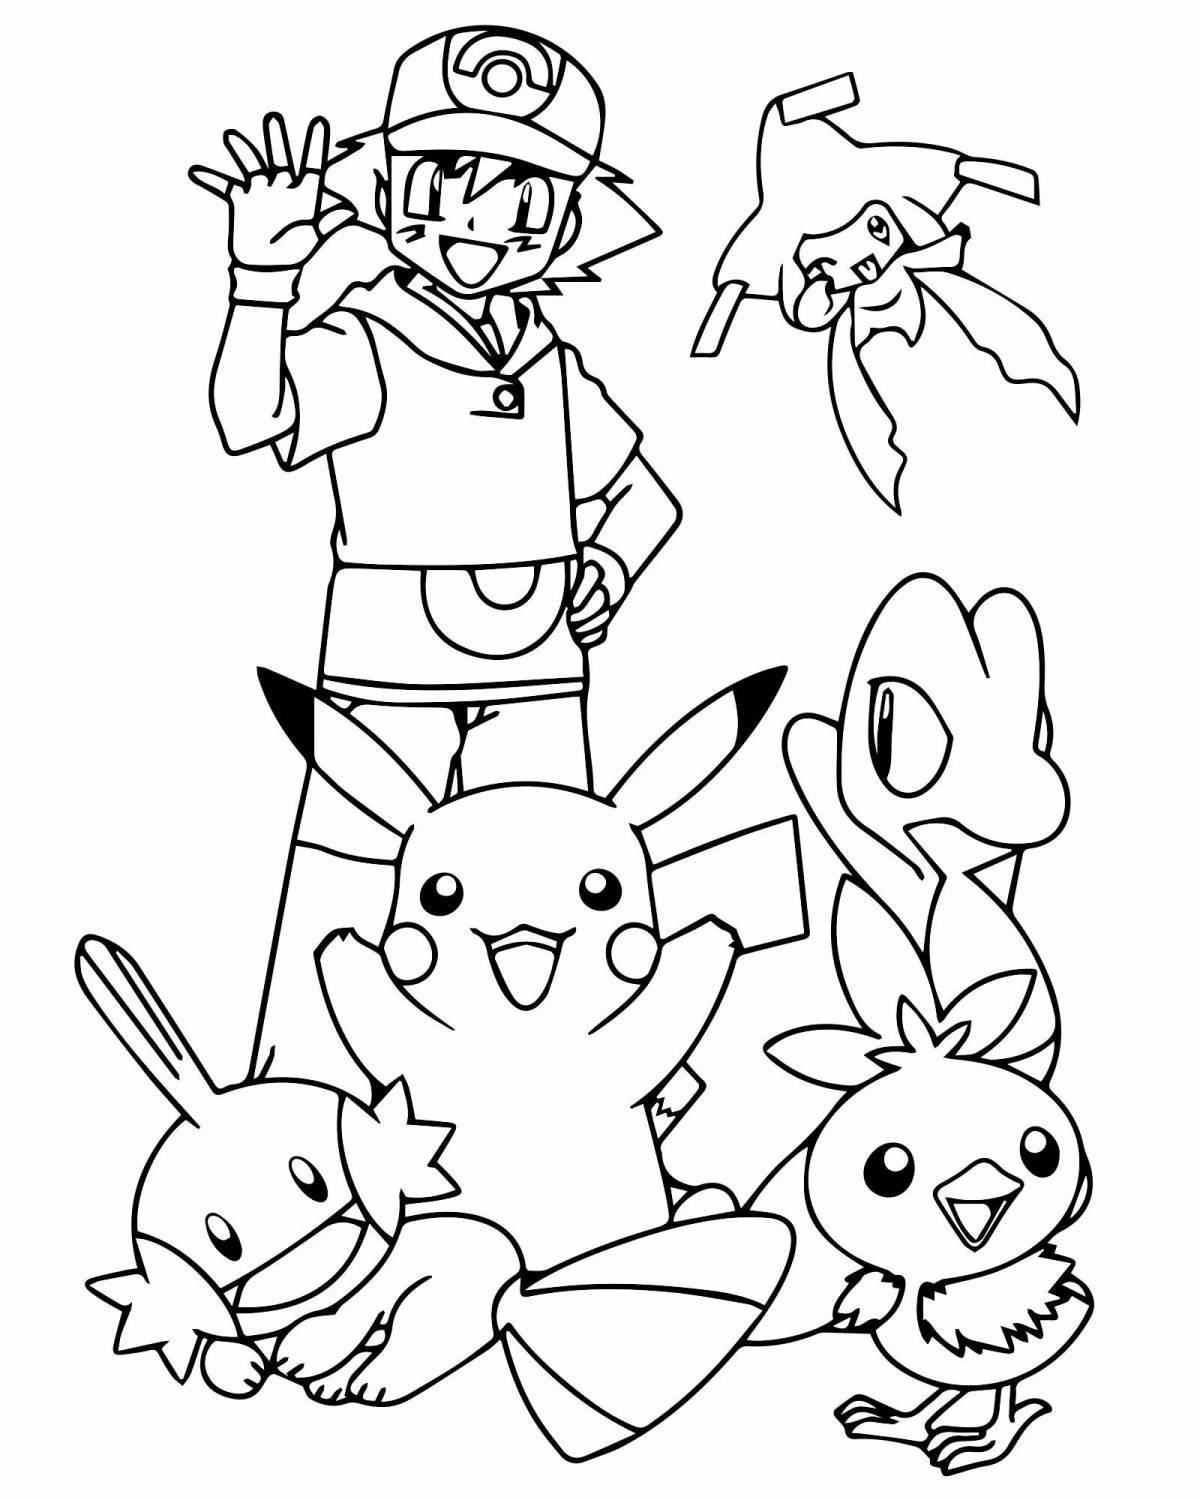 Pikachu and friends #3